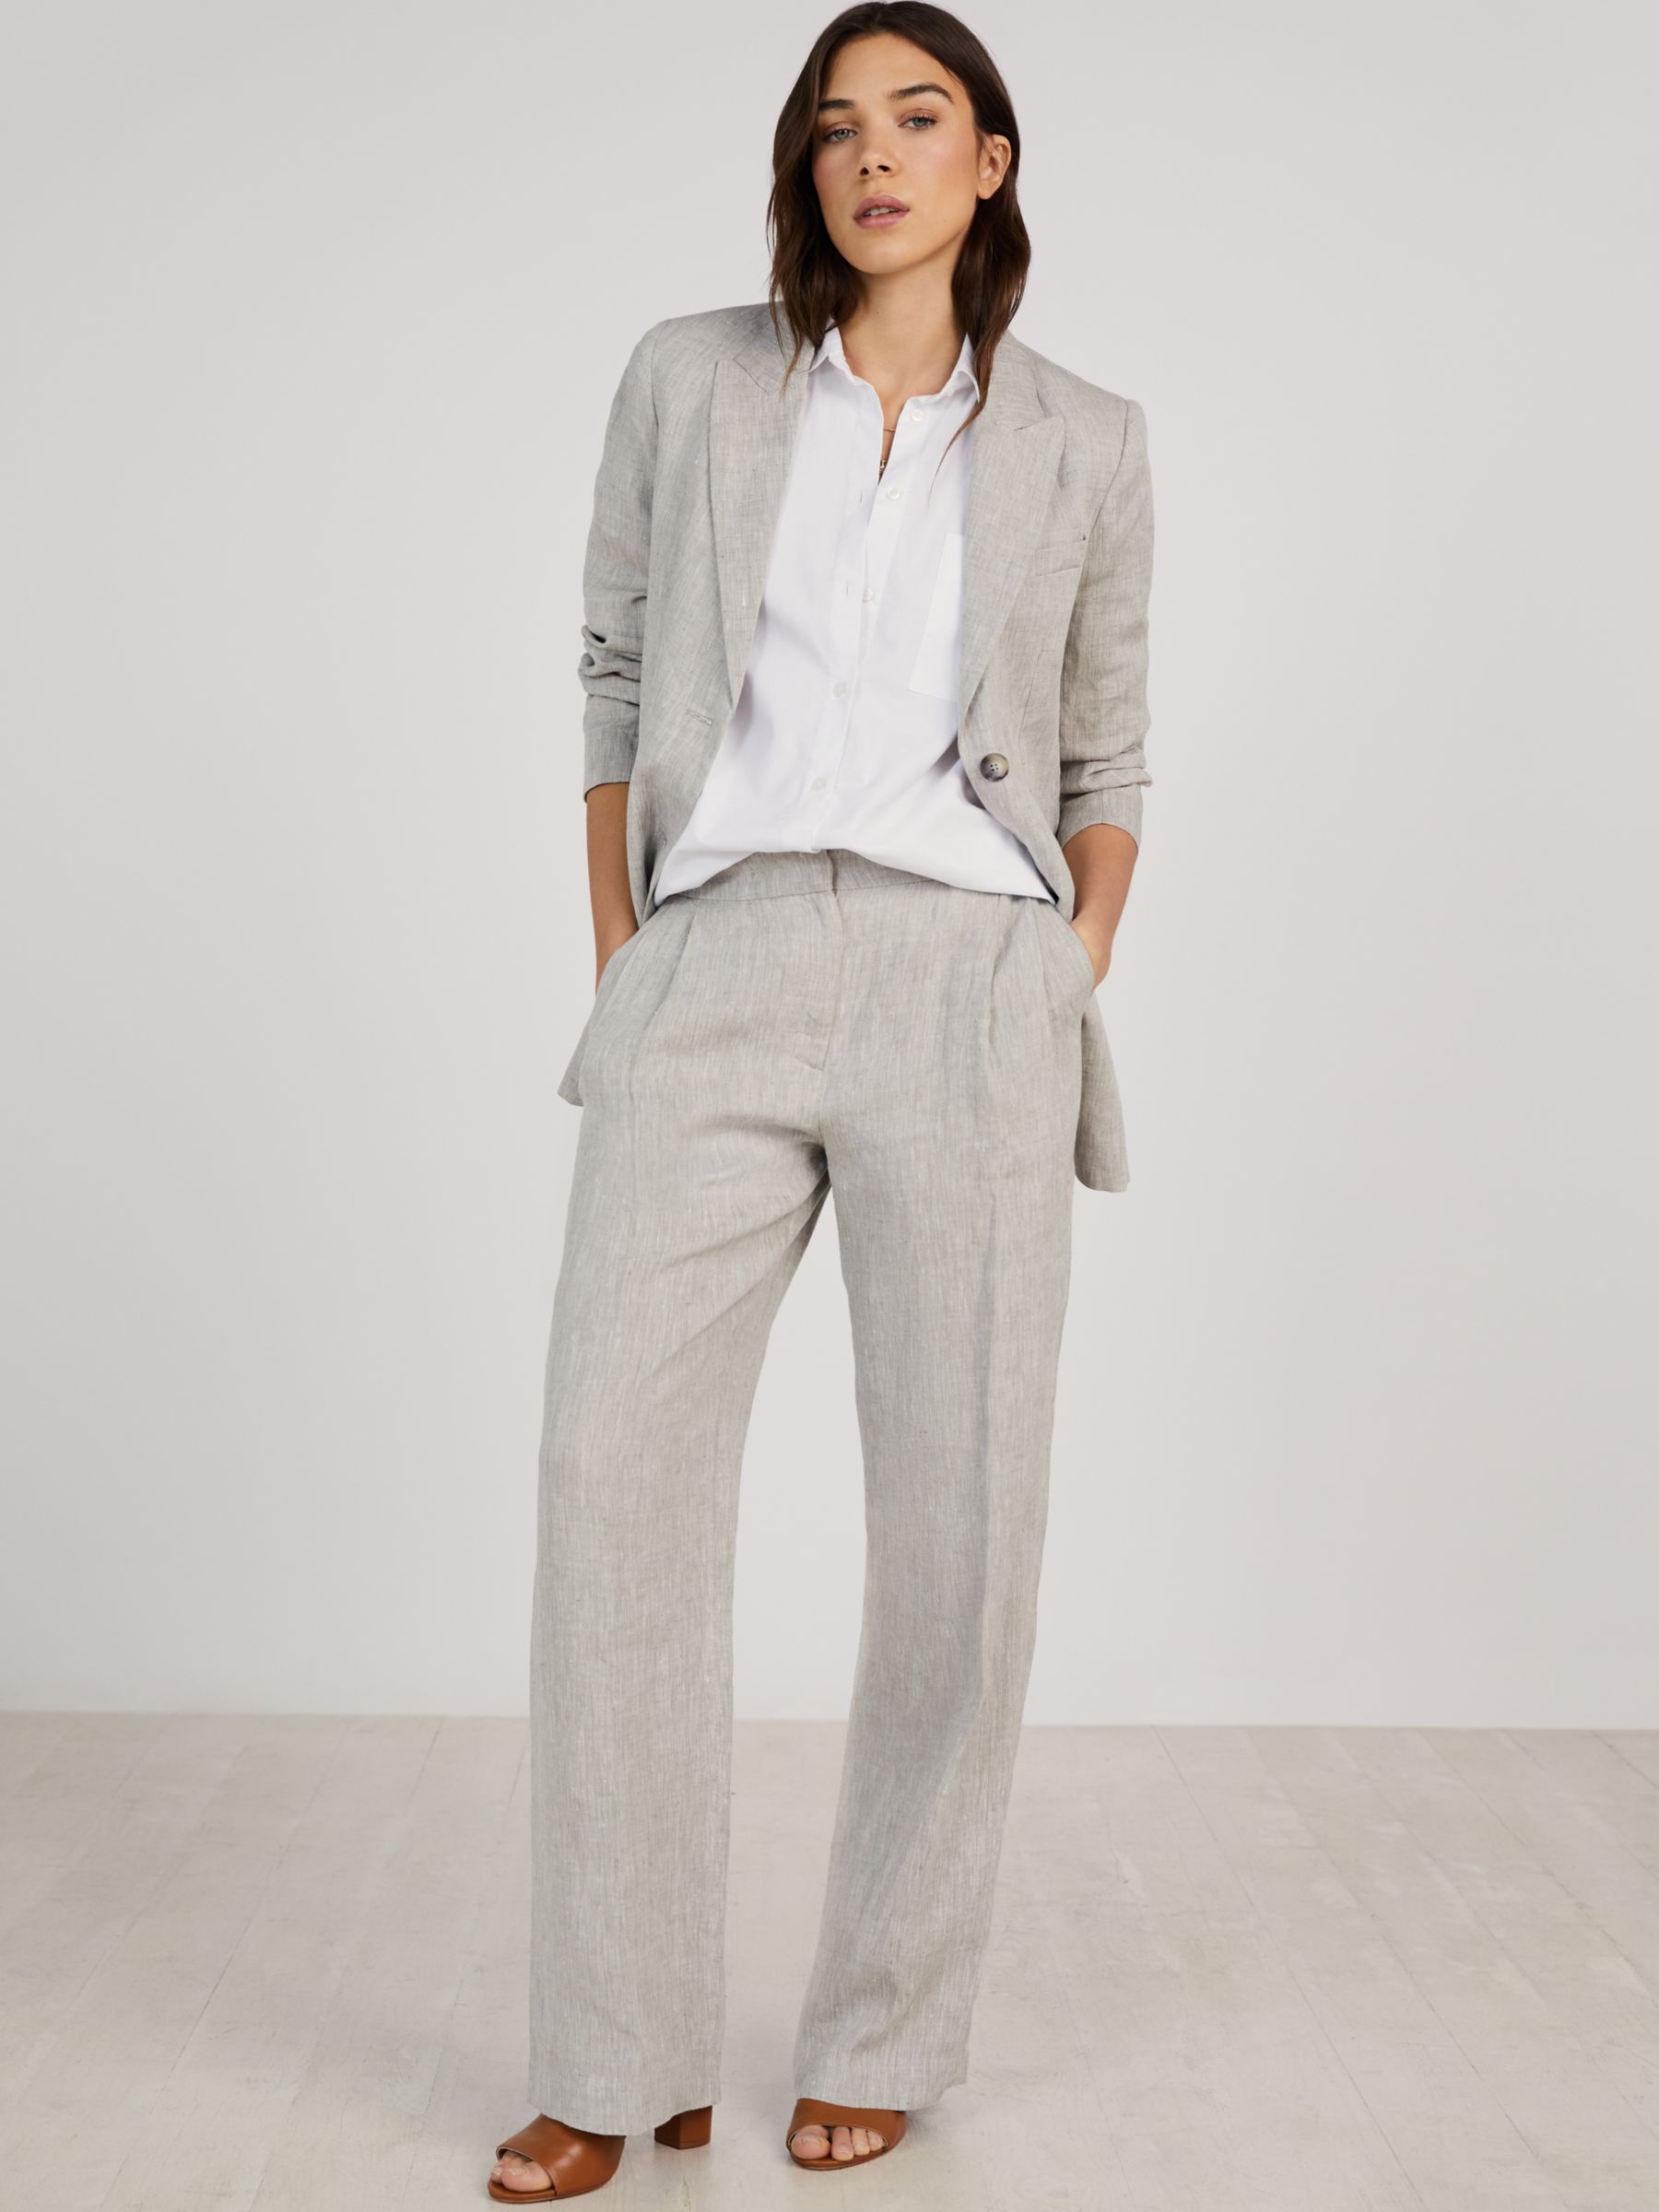 Baukjen Maxine Tailored Hemp Trousers, Beige at John Lewis & Partners